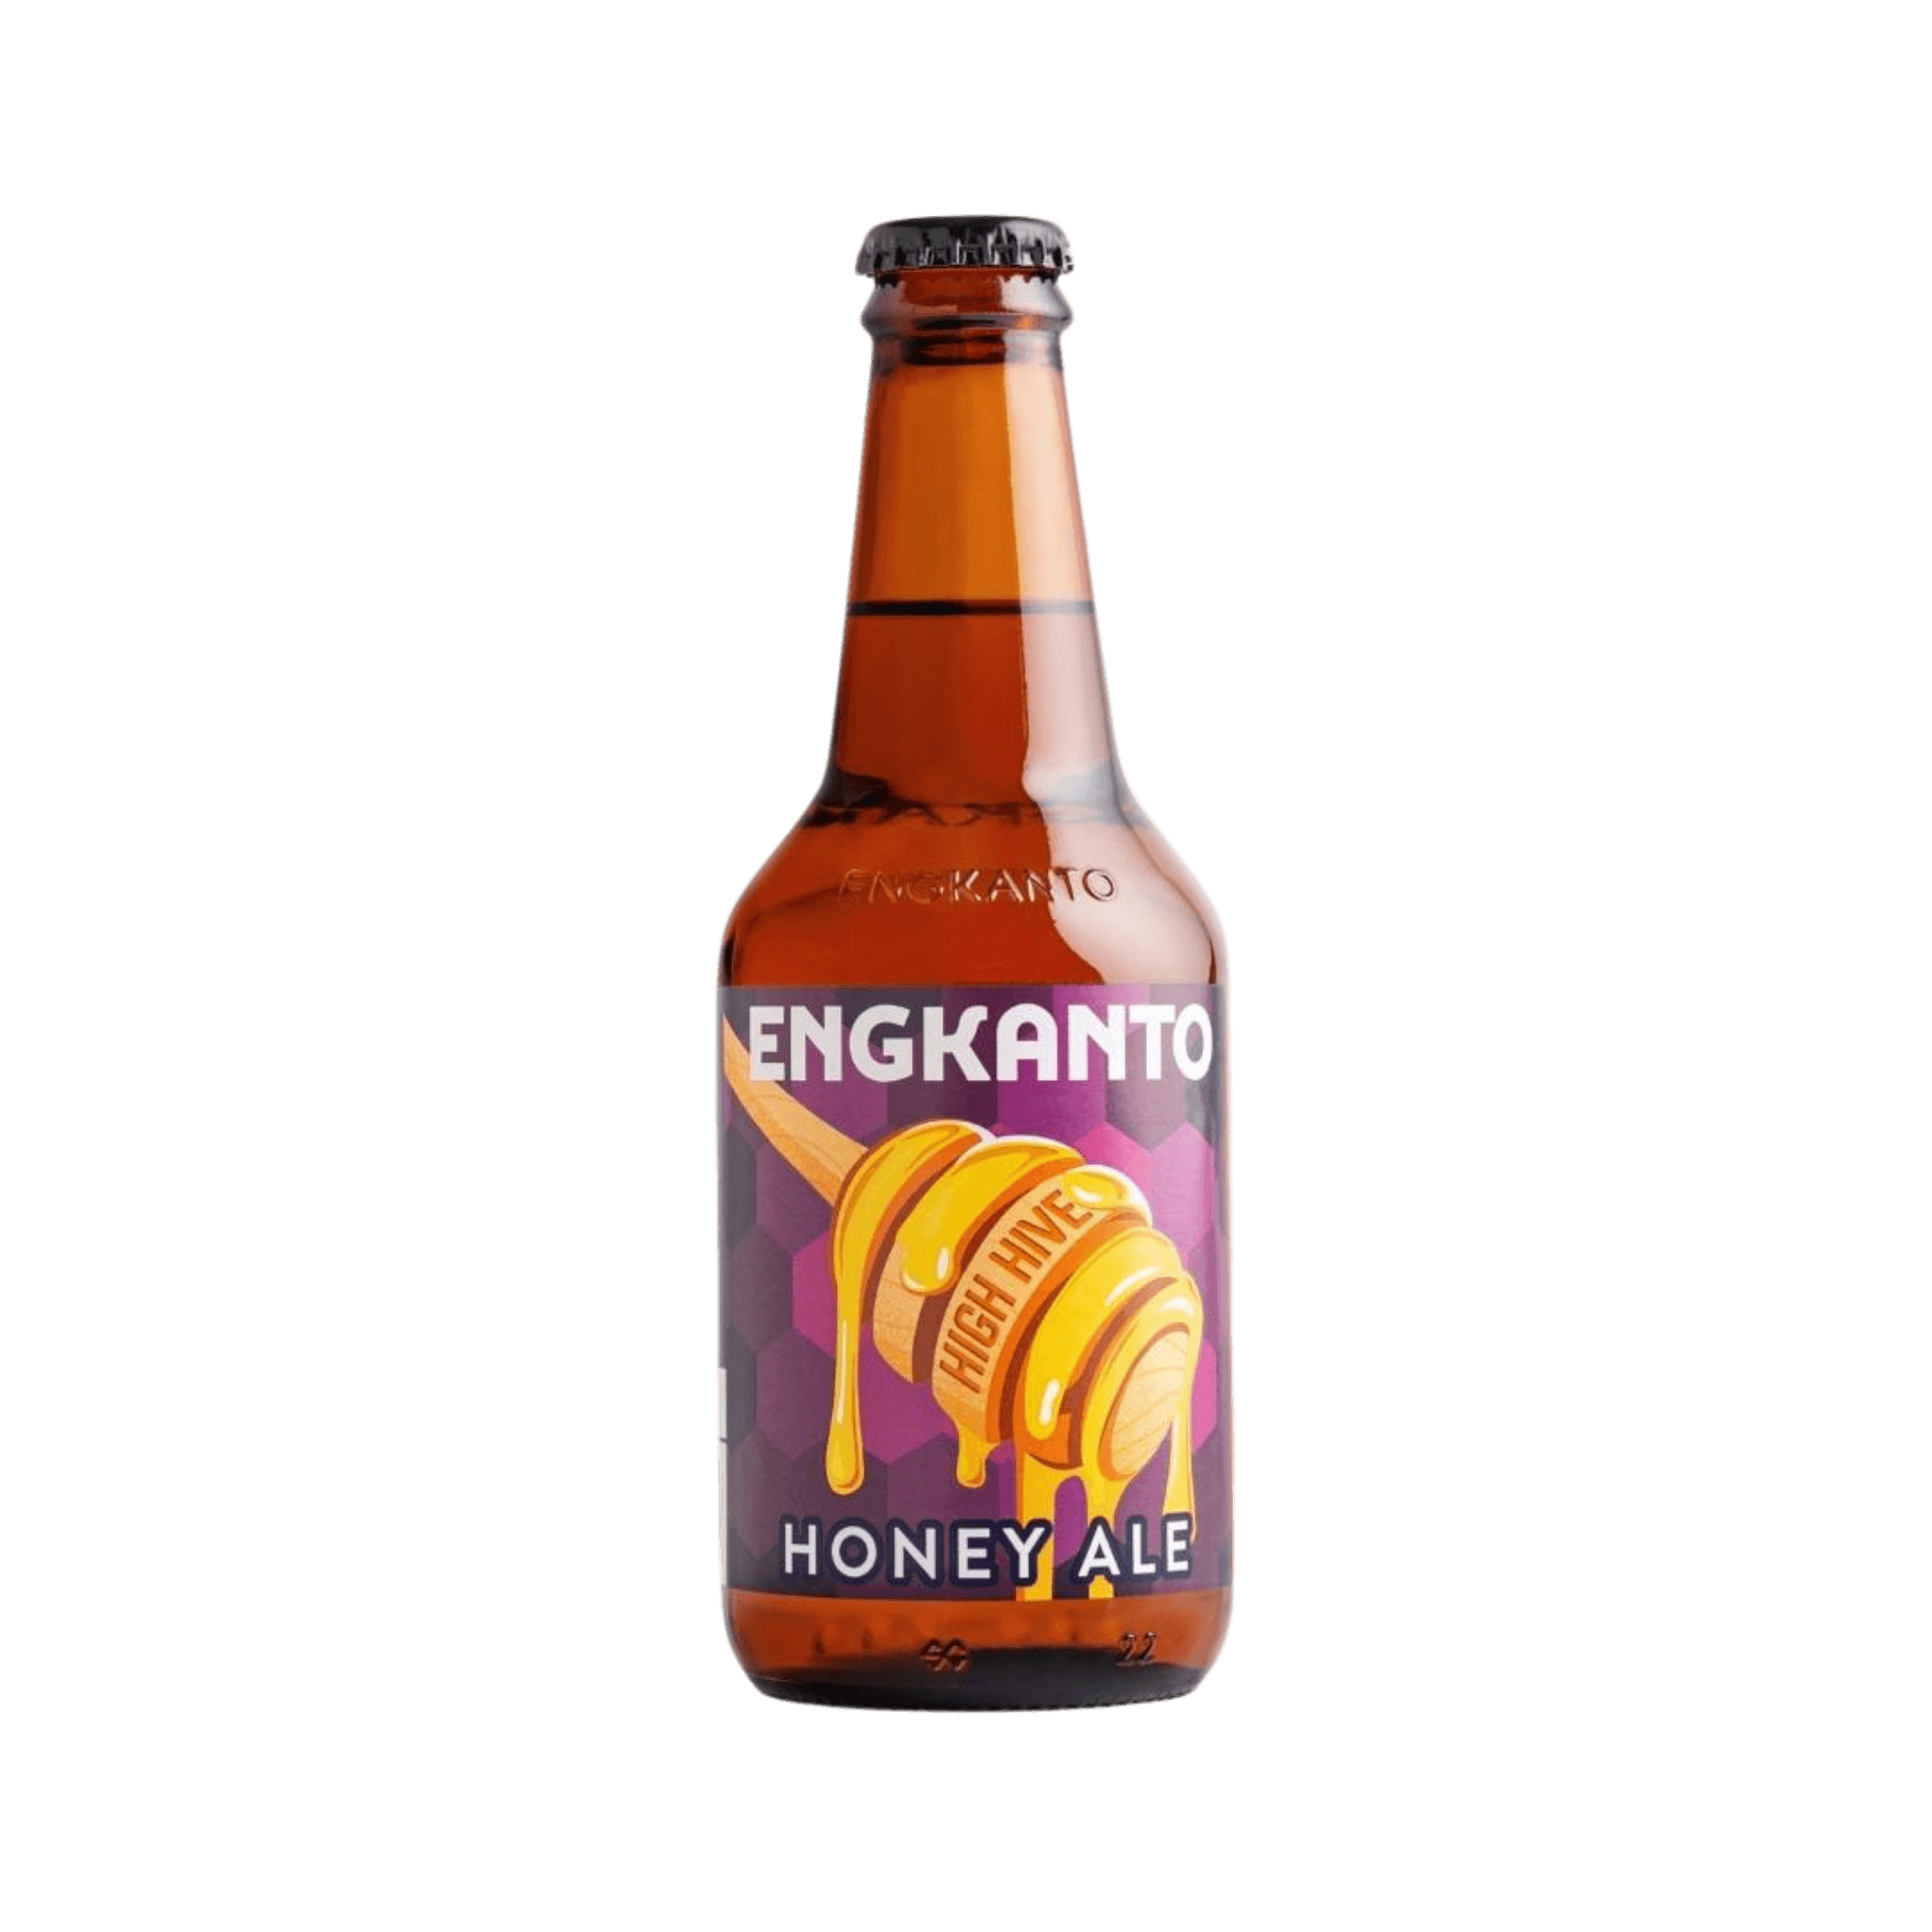 Engkanto High Hive – Honey Ale 330mL Bottle at ₱101.00